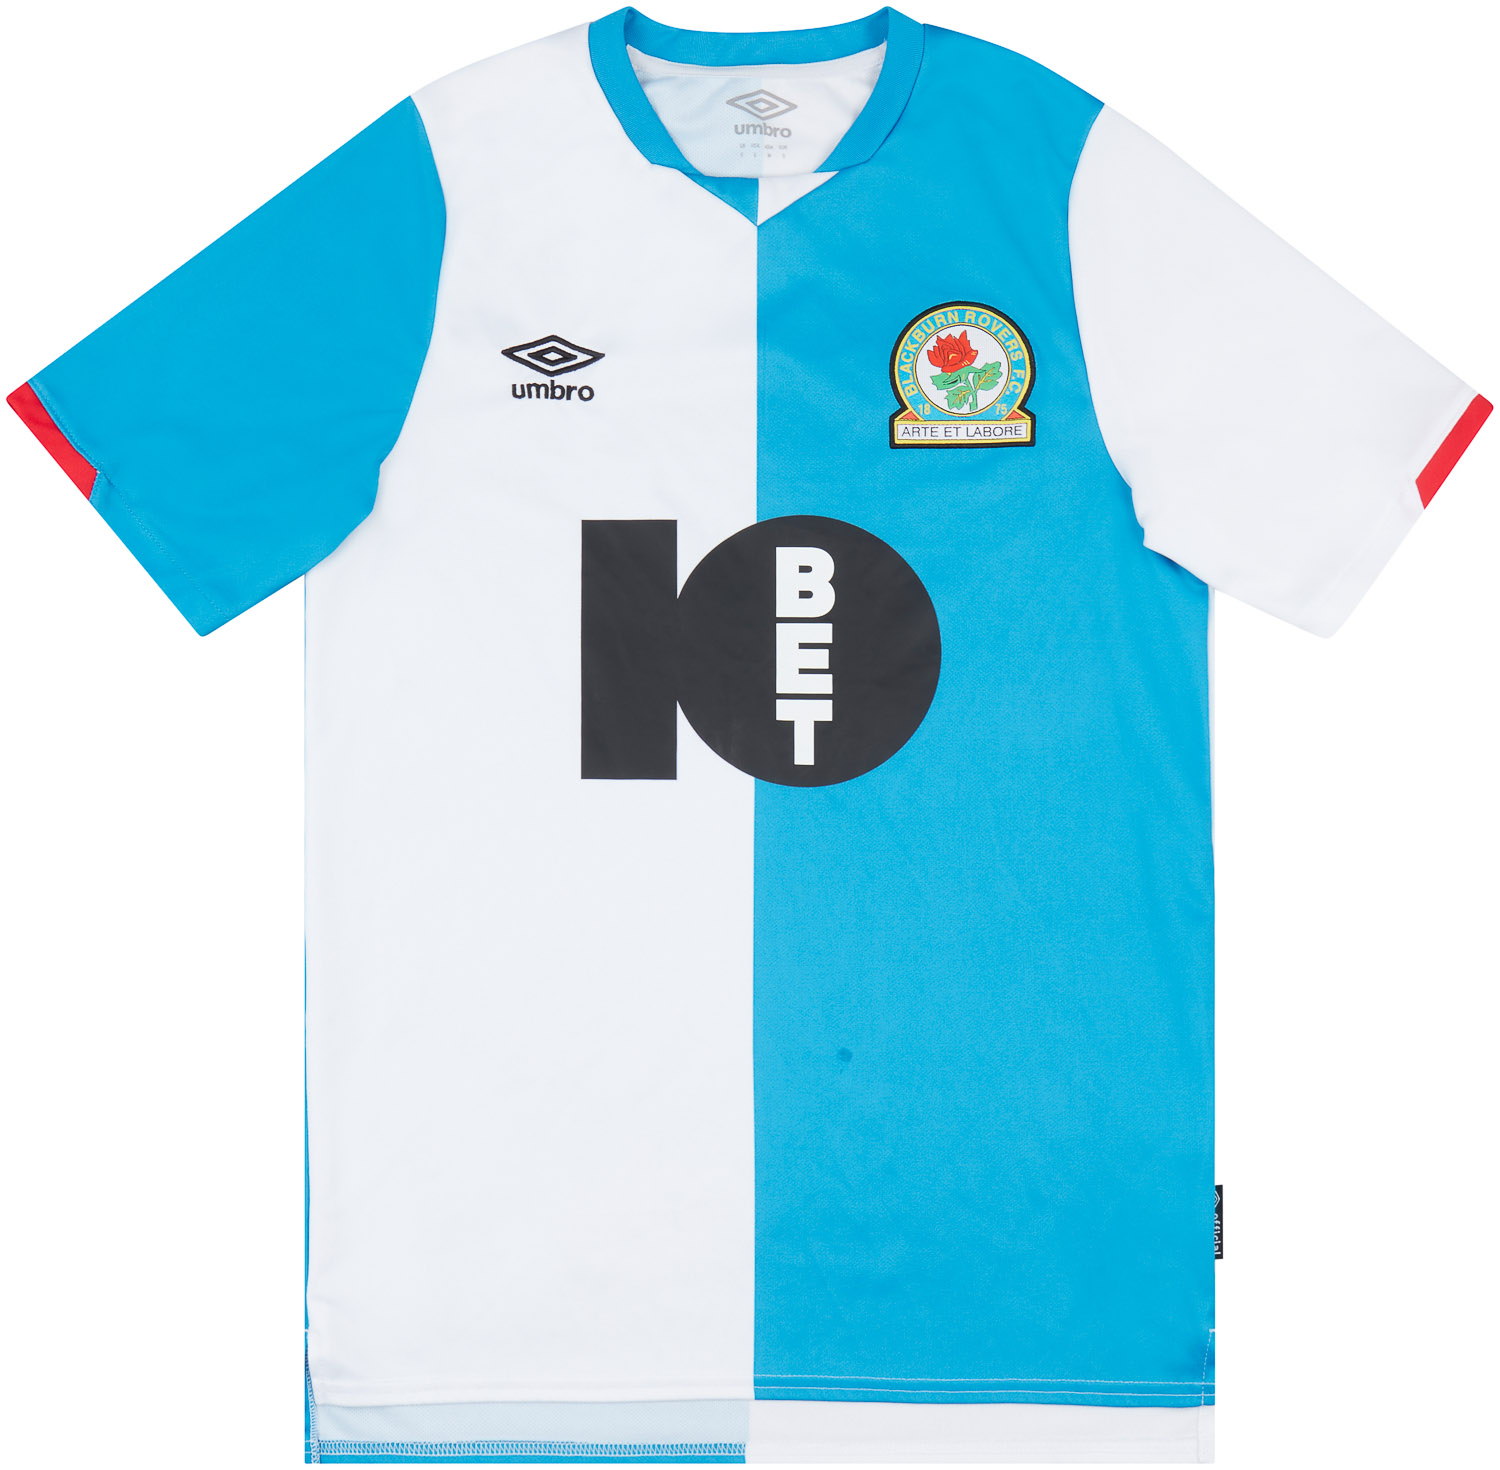 Retro Blackburn Rovers Shirt